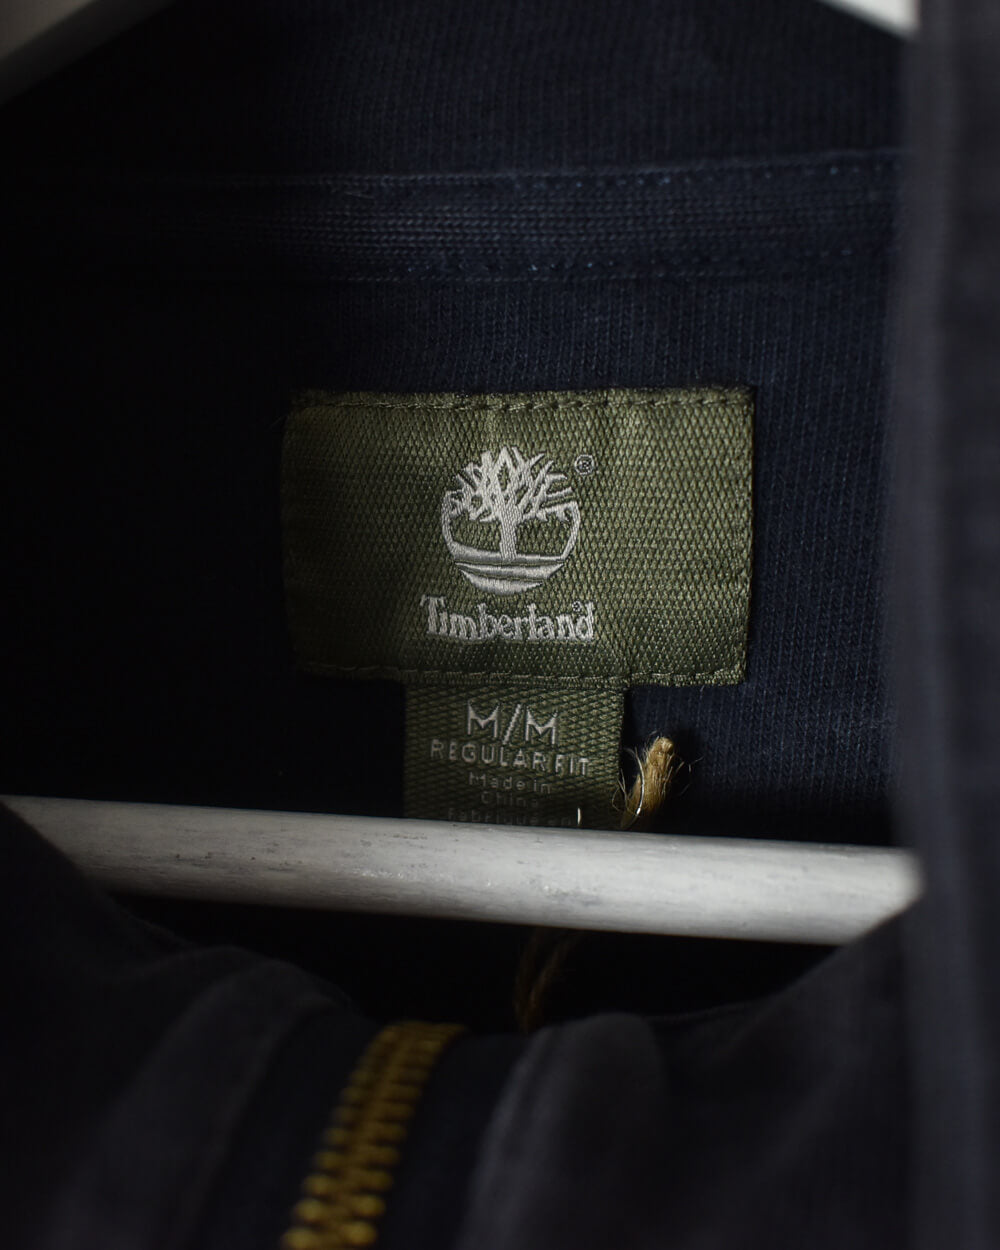 Timberland 1/4 Zip Sweatshirt - Medium - Domno Vintage 90s, 80s, 00s Retro and Vintage Clothing 